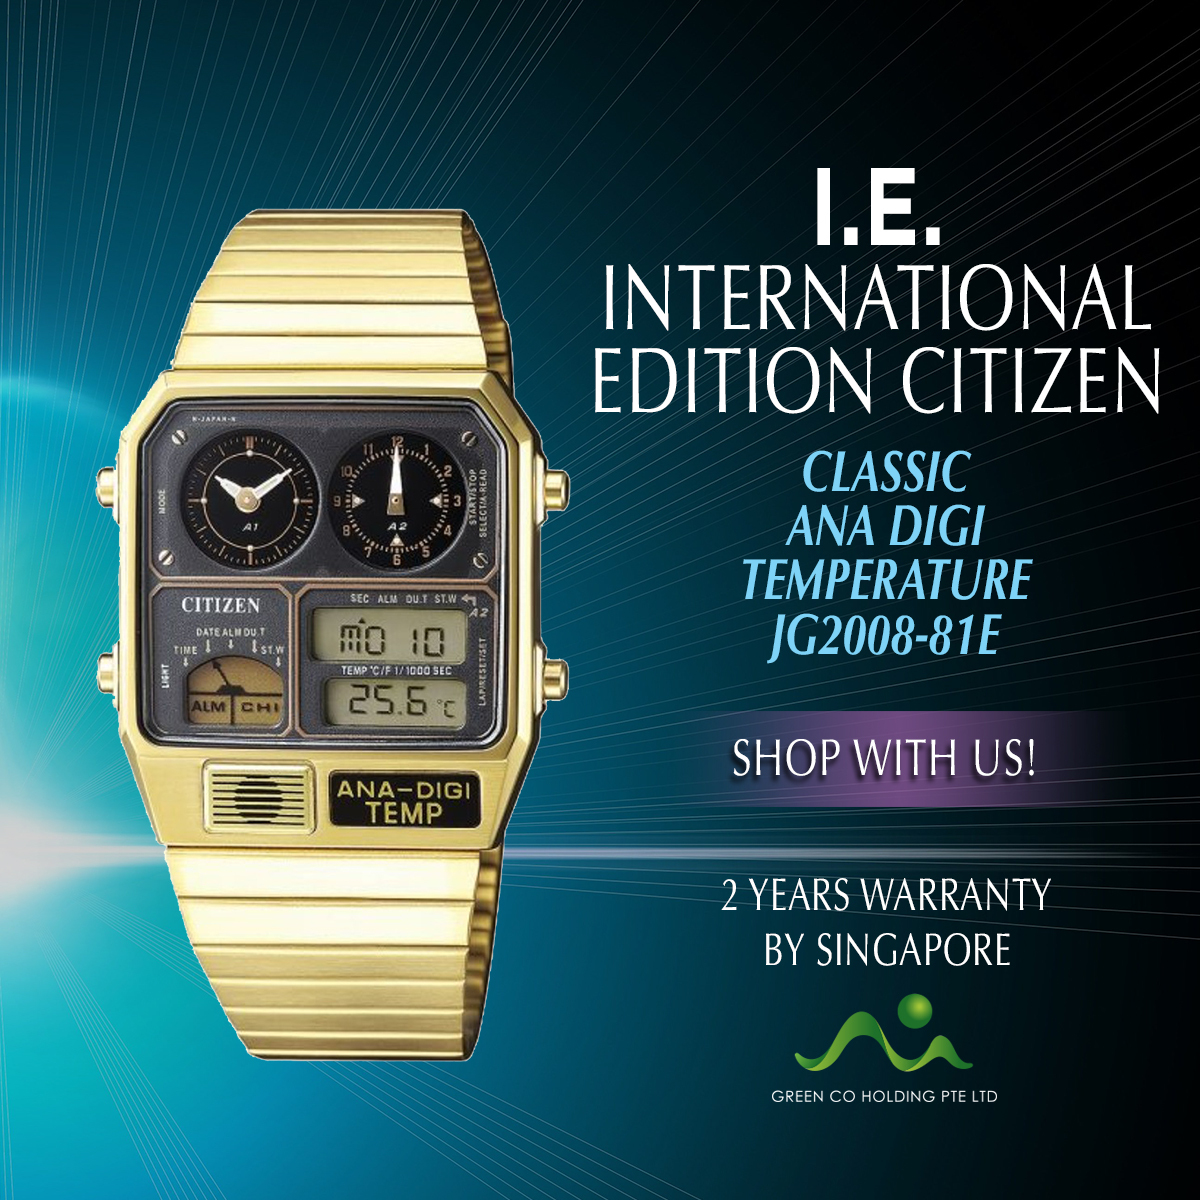 Citizen International Edition Classic Ana Digi Temperature Digital Jg2008 81e Wristwatches